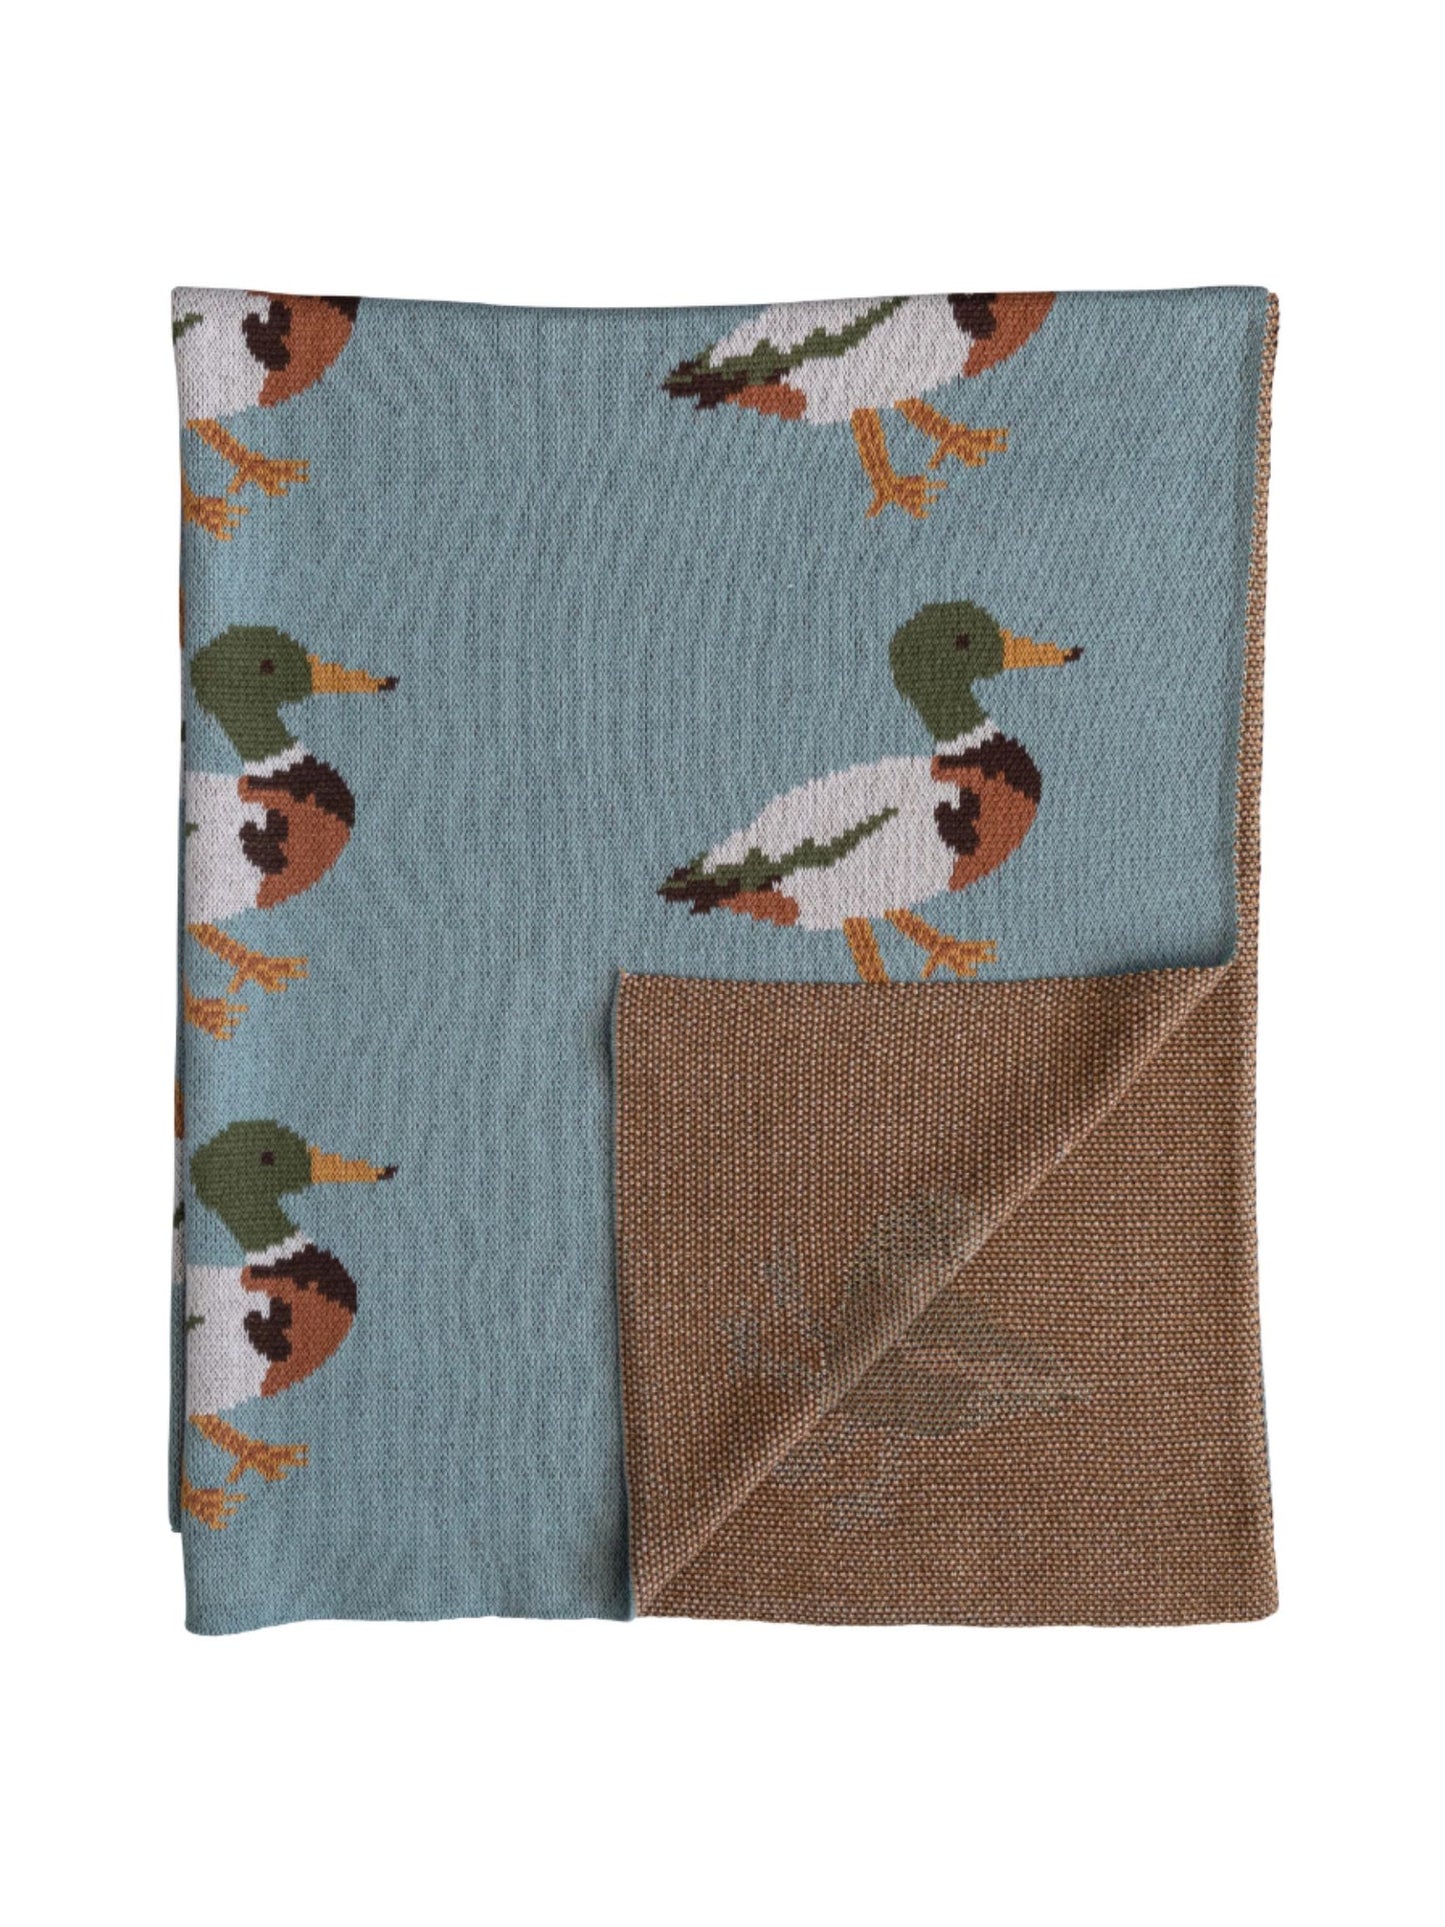 Knit Baby Blanket w/ Ducks